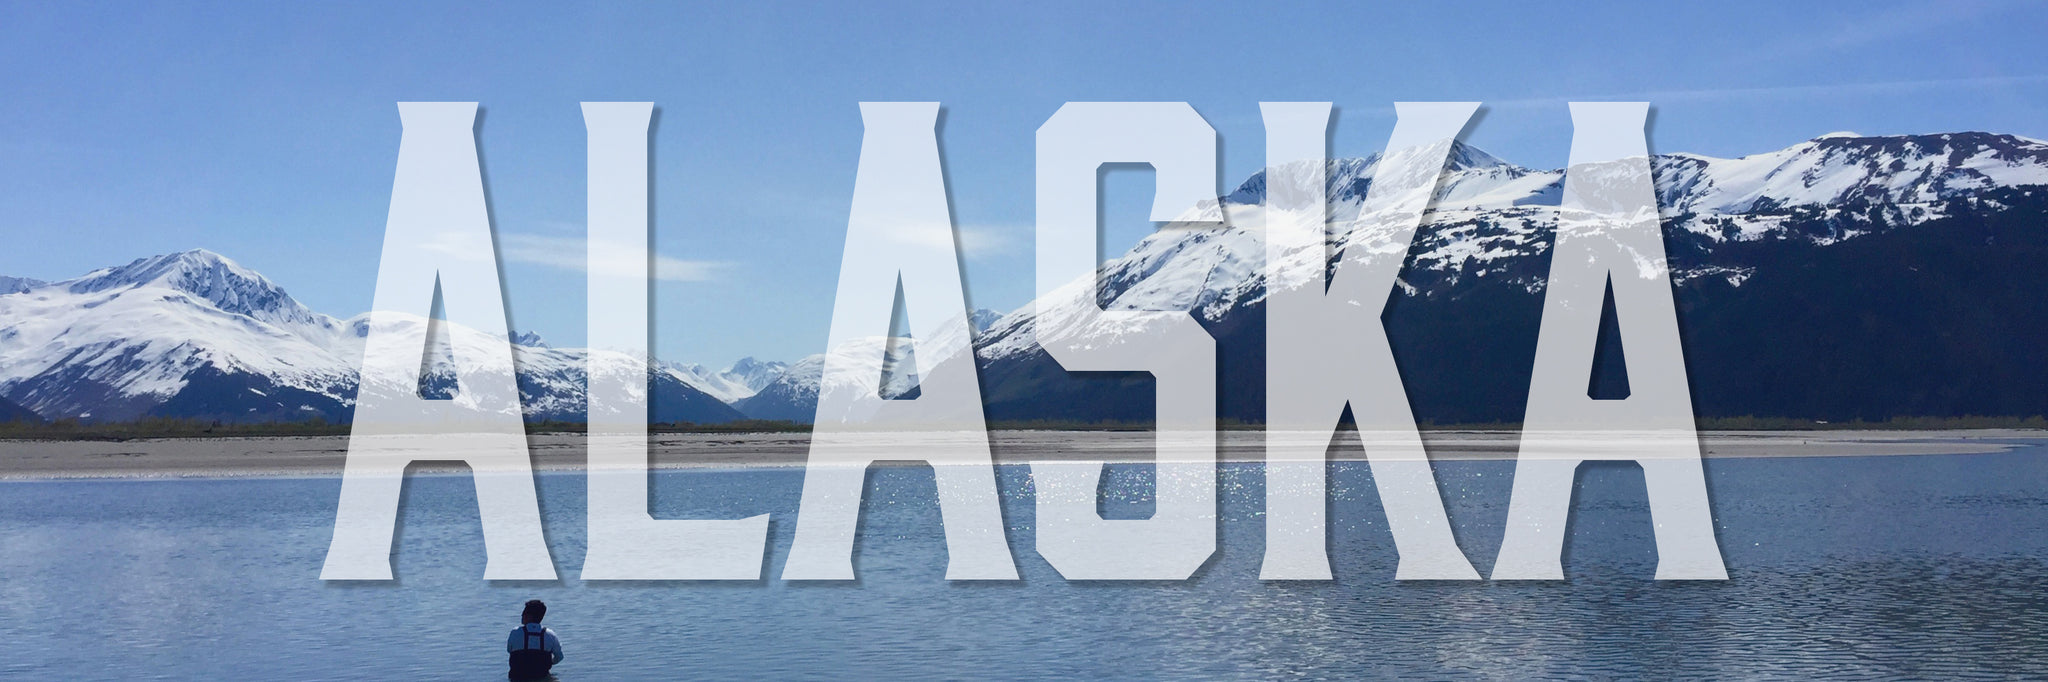 Alaska Outdoor Apparel and Accessories